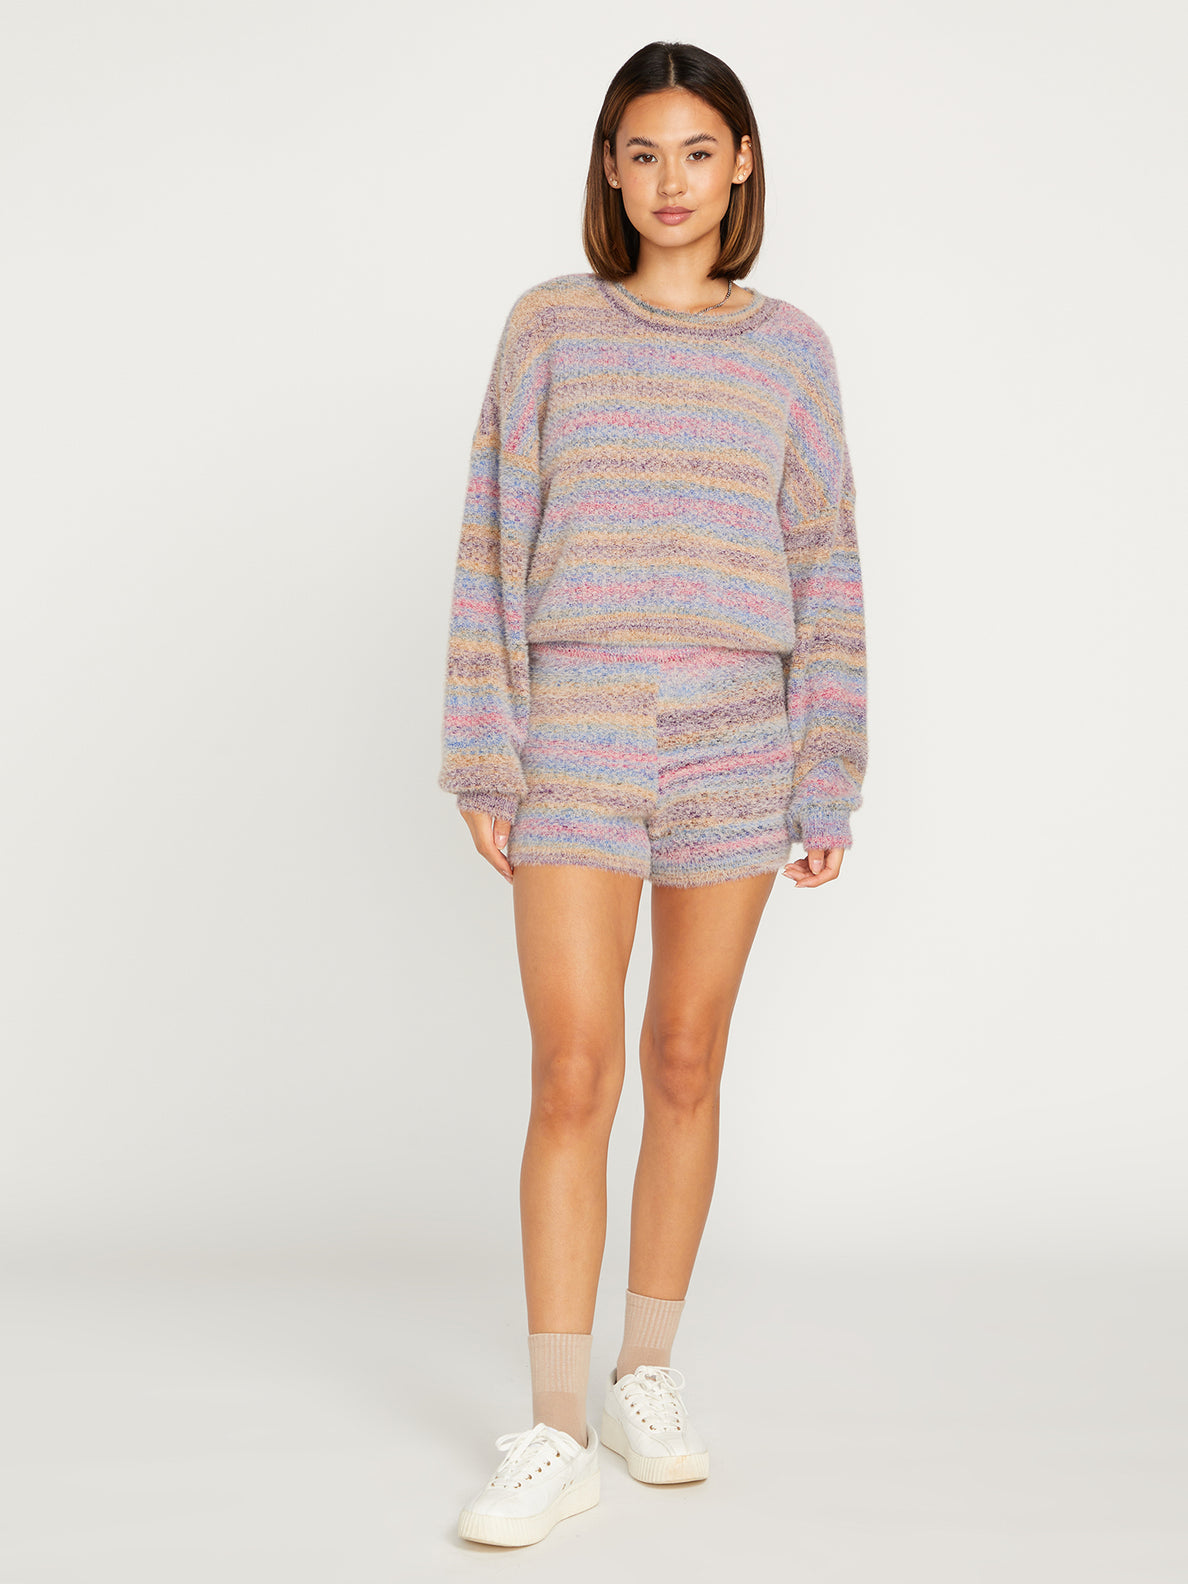 Quween Beach Sweater - Multi (B0712302_MLT) [F]